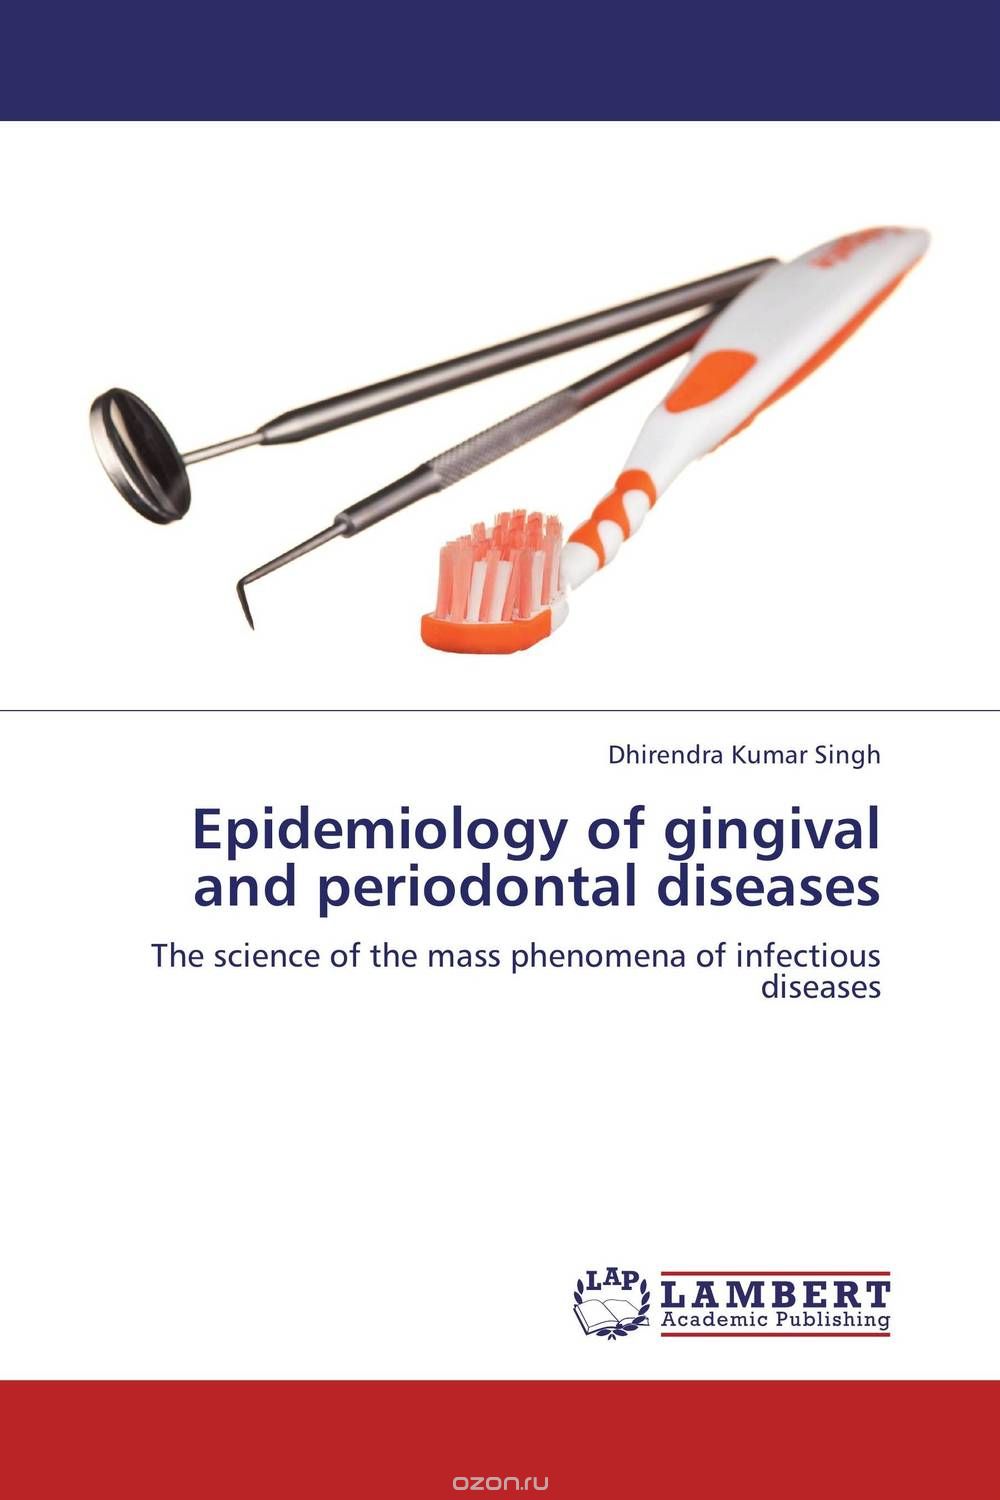 Скачать книгу "Epidemiology of gingival and periodontal diseases"